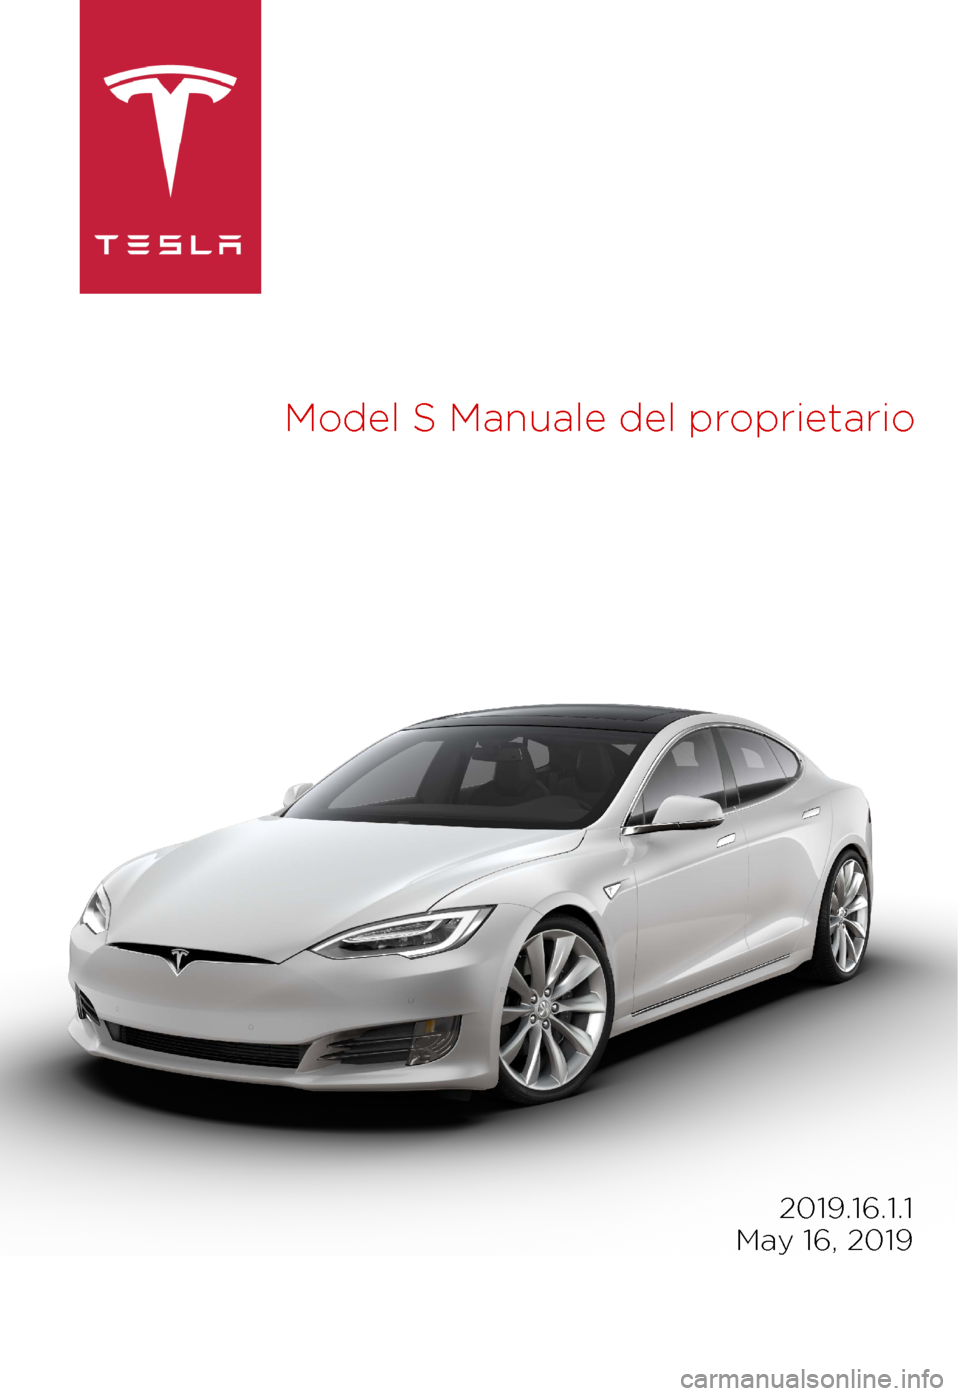 TESLA MODEL S 2019  Manuale del proprietario (in Italian) 